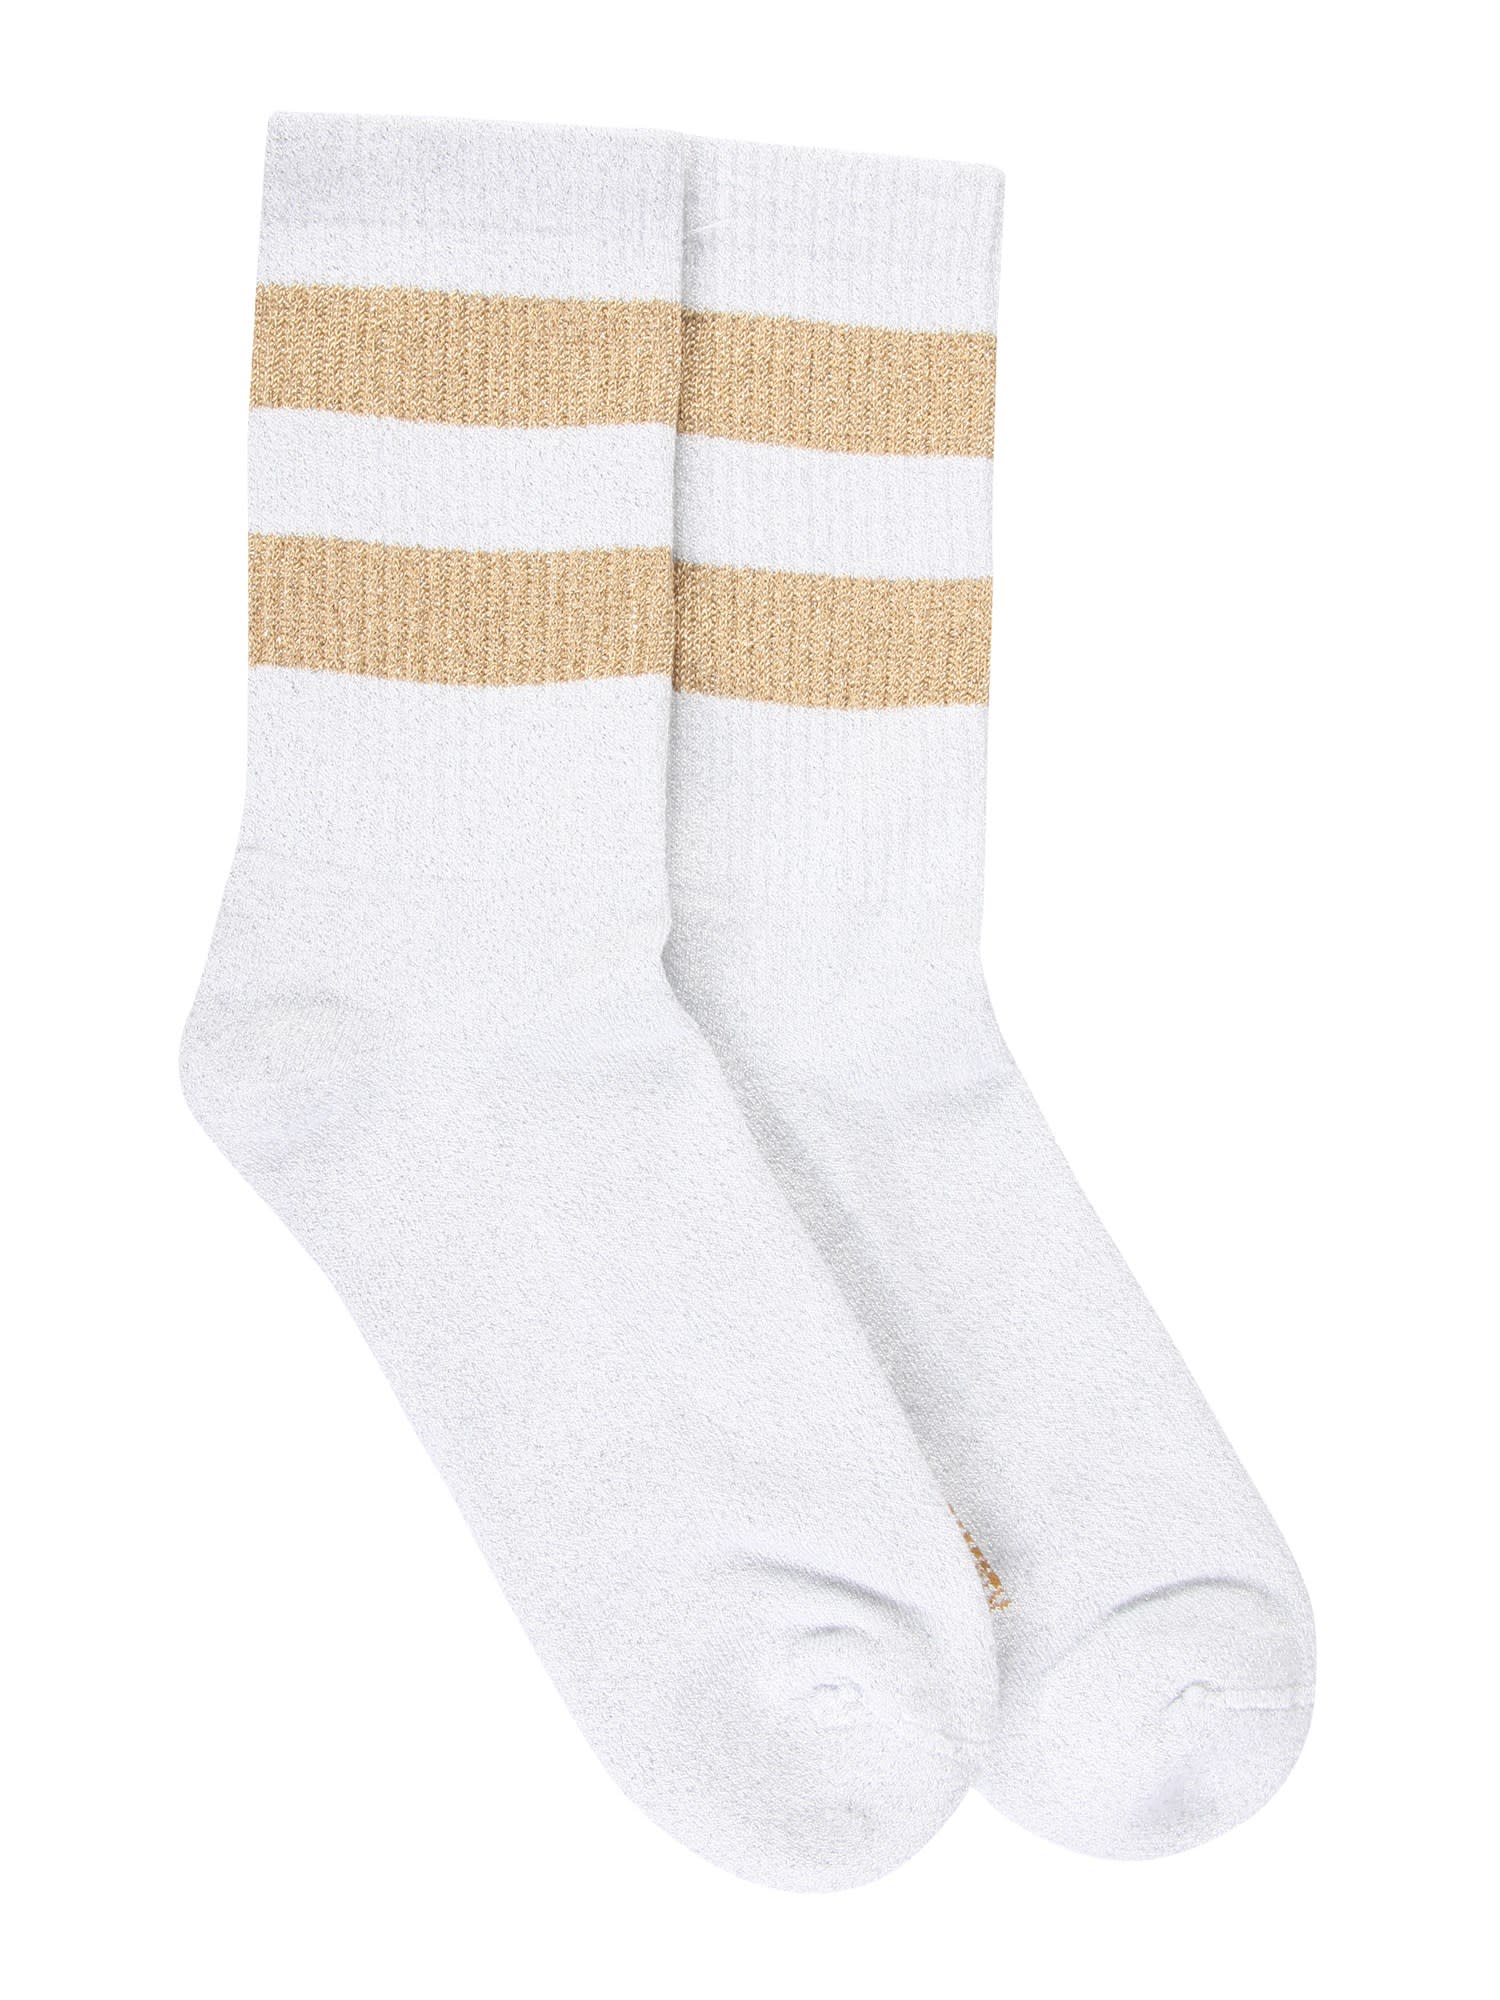 Golden Goose Medium Leg Socks